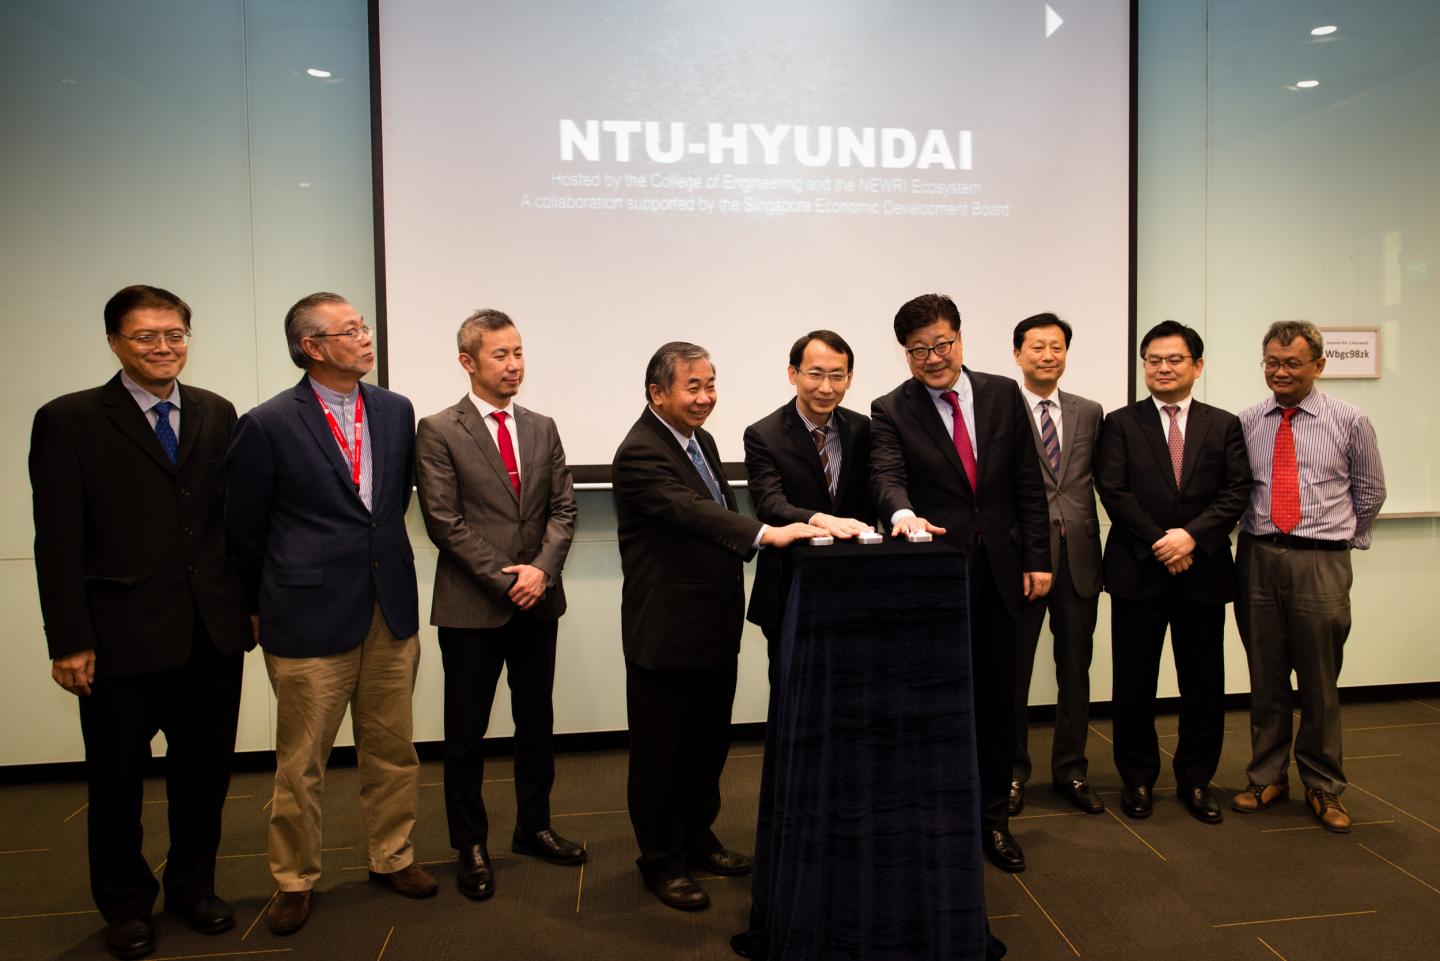 Launching the New NTU-Hyundai Urban System Centre